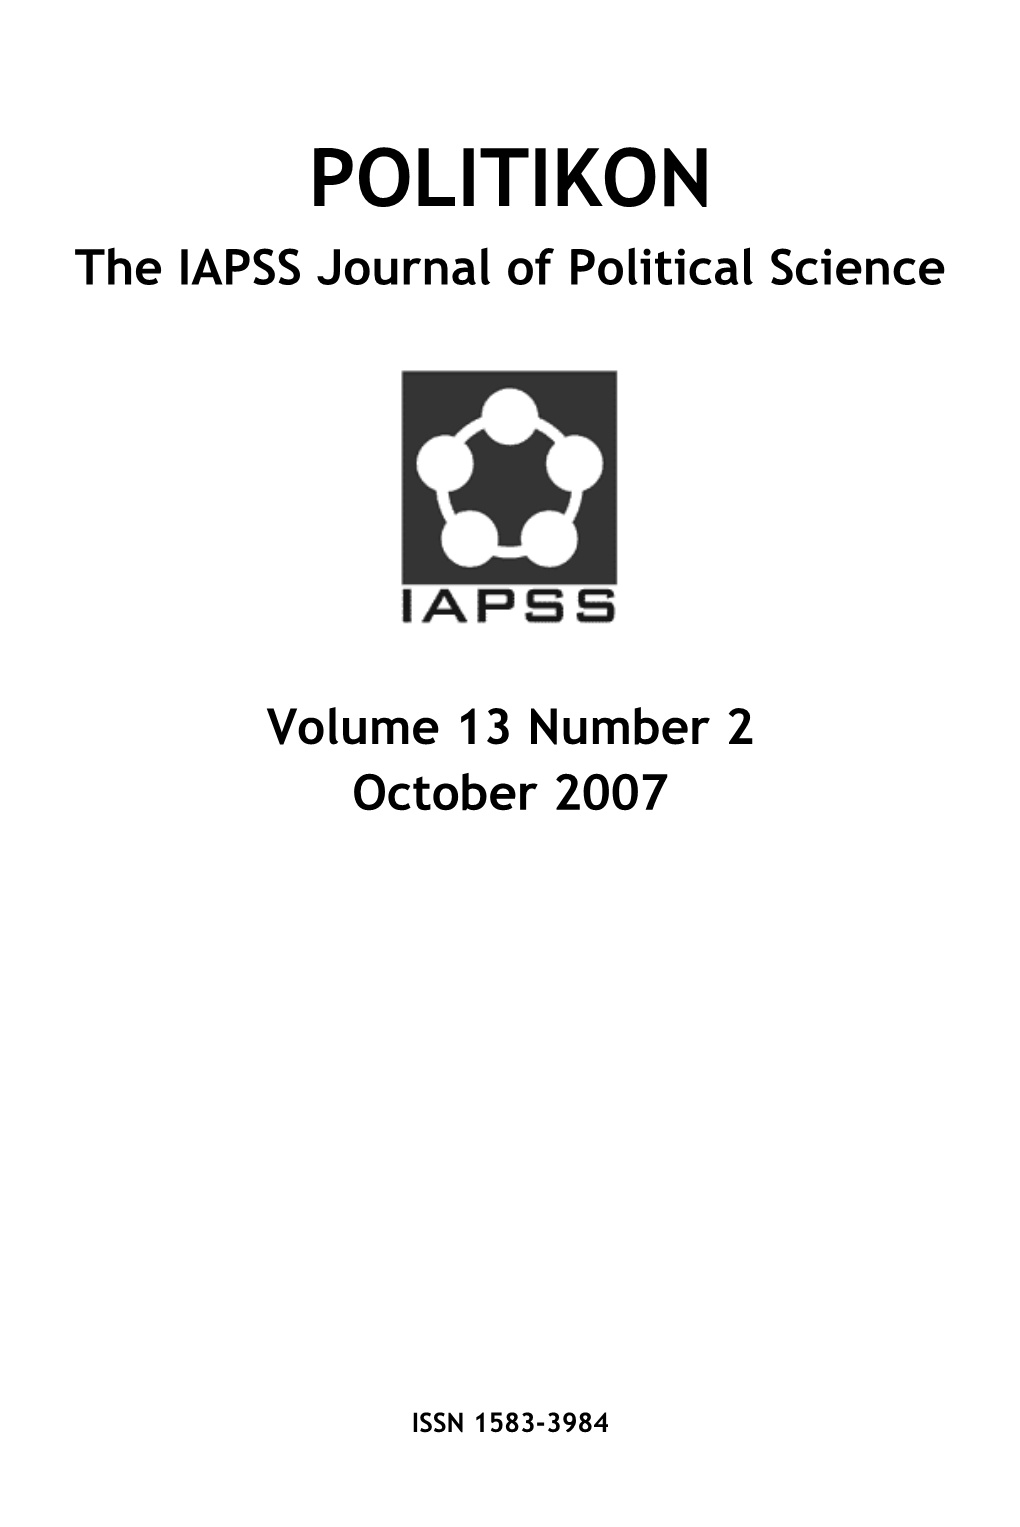 POLITIKON the IAPSS Journal of Political Science